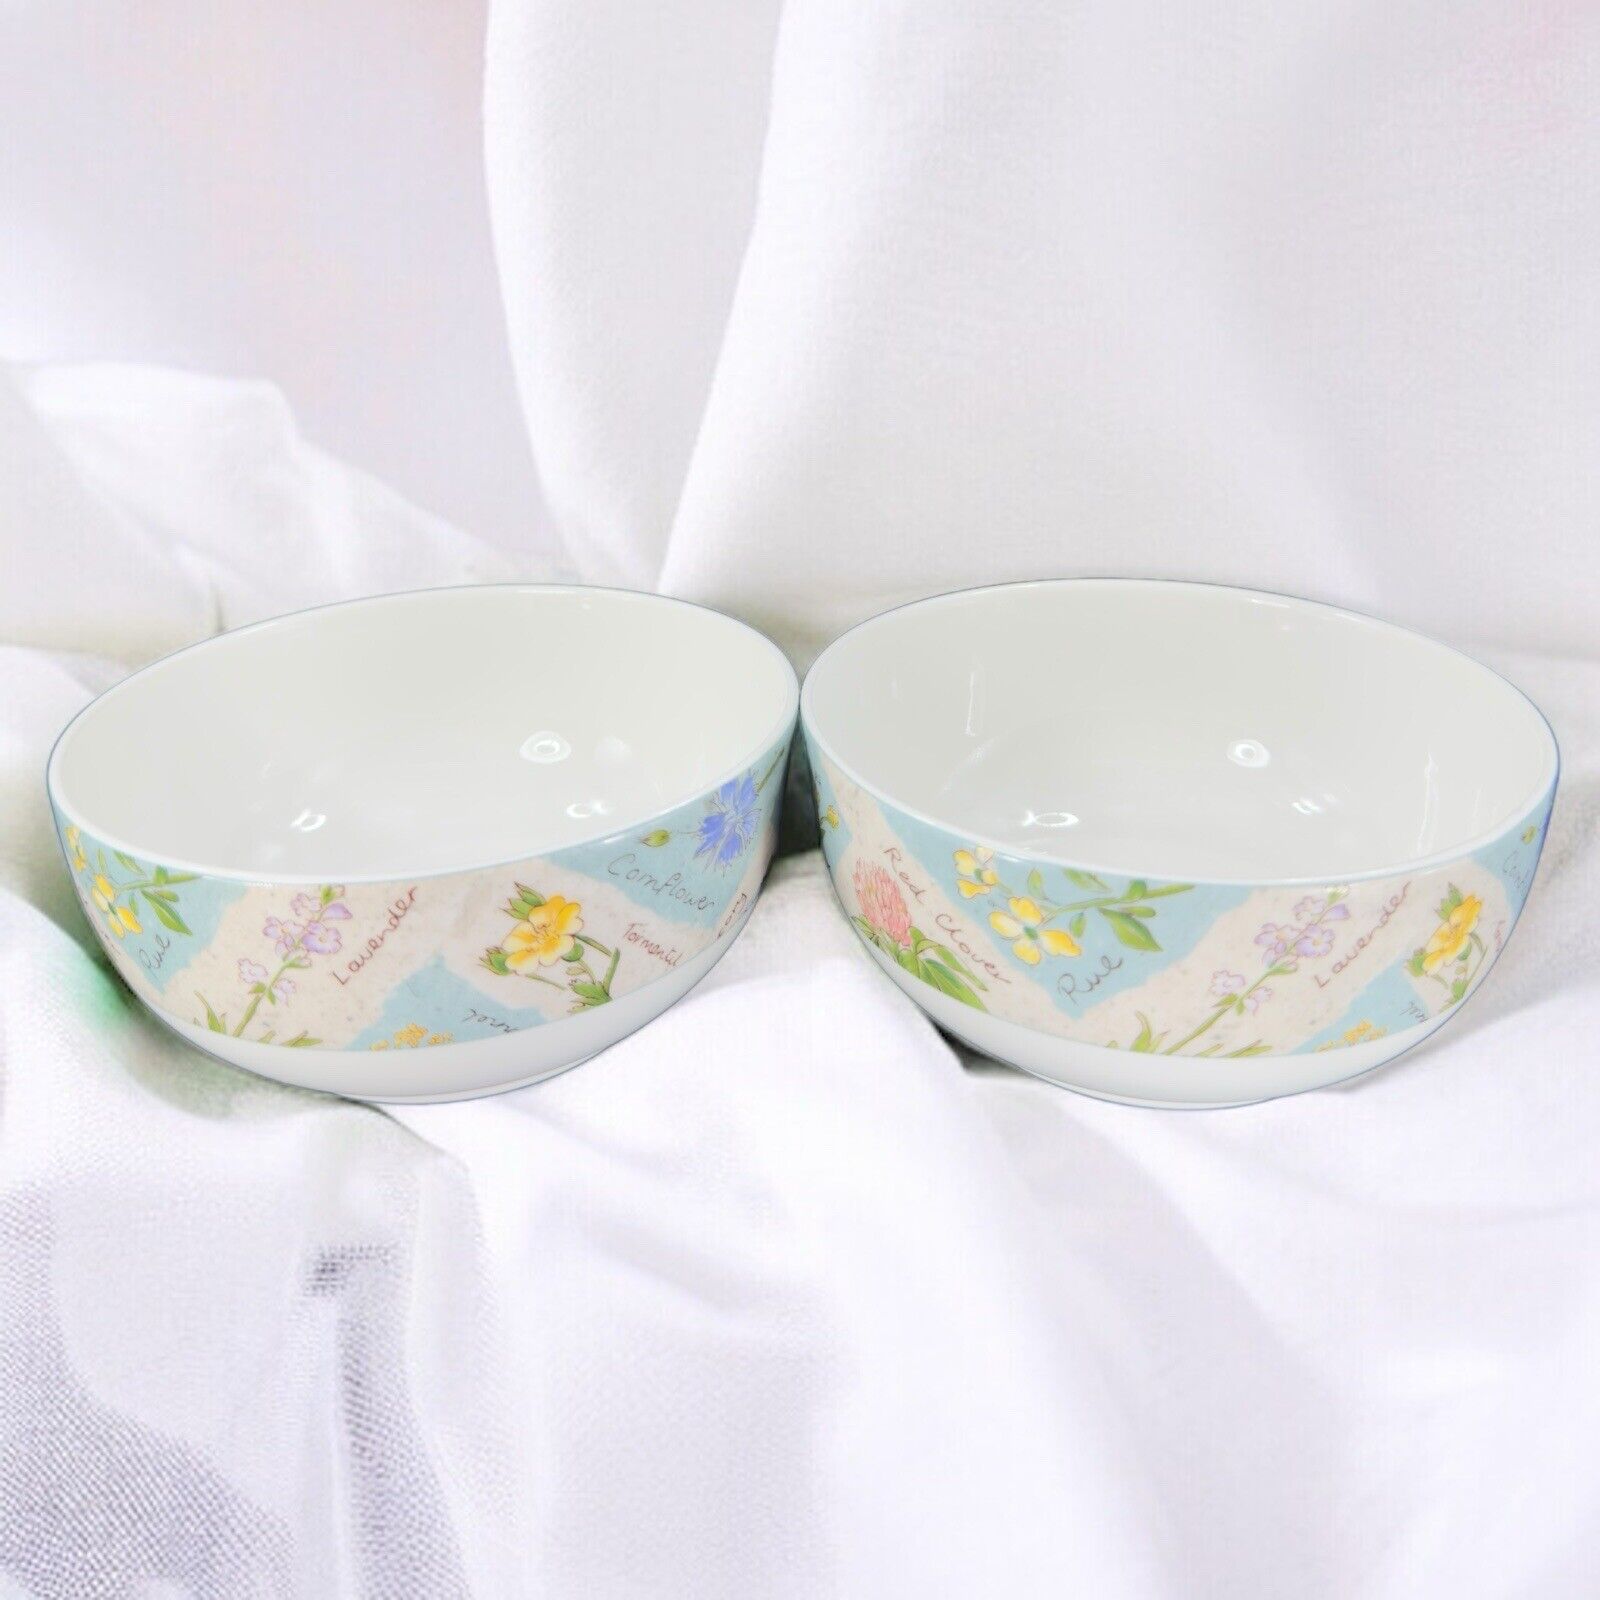 1996 Royal Doulton Wildflowers All Purpose Bowl Dish Set 2 Fine Porcelain Bowls